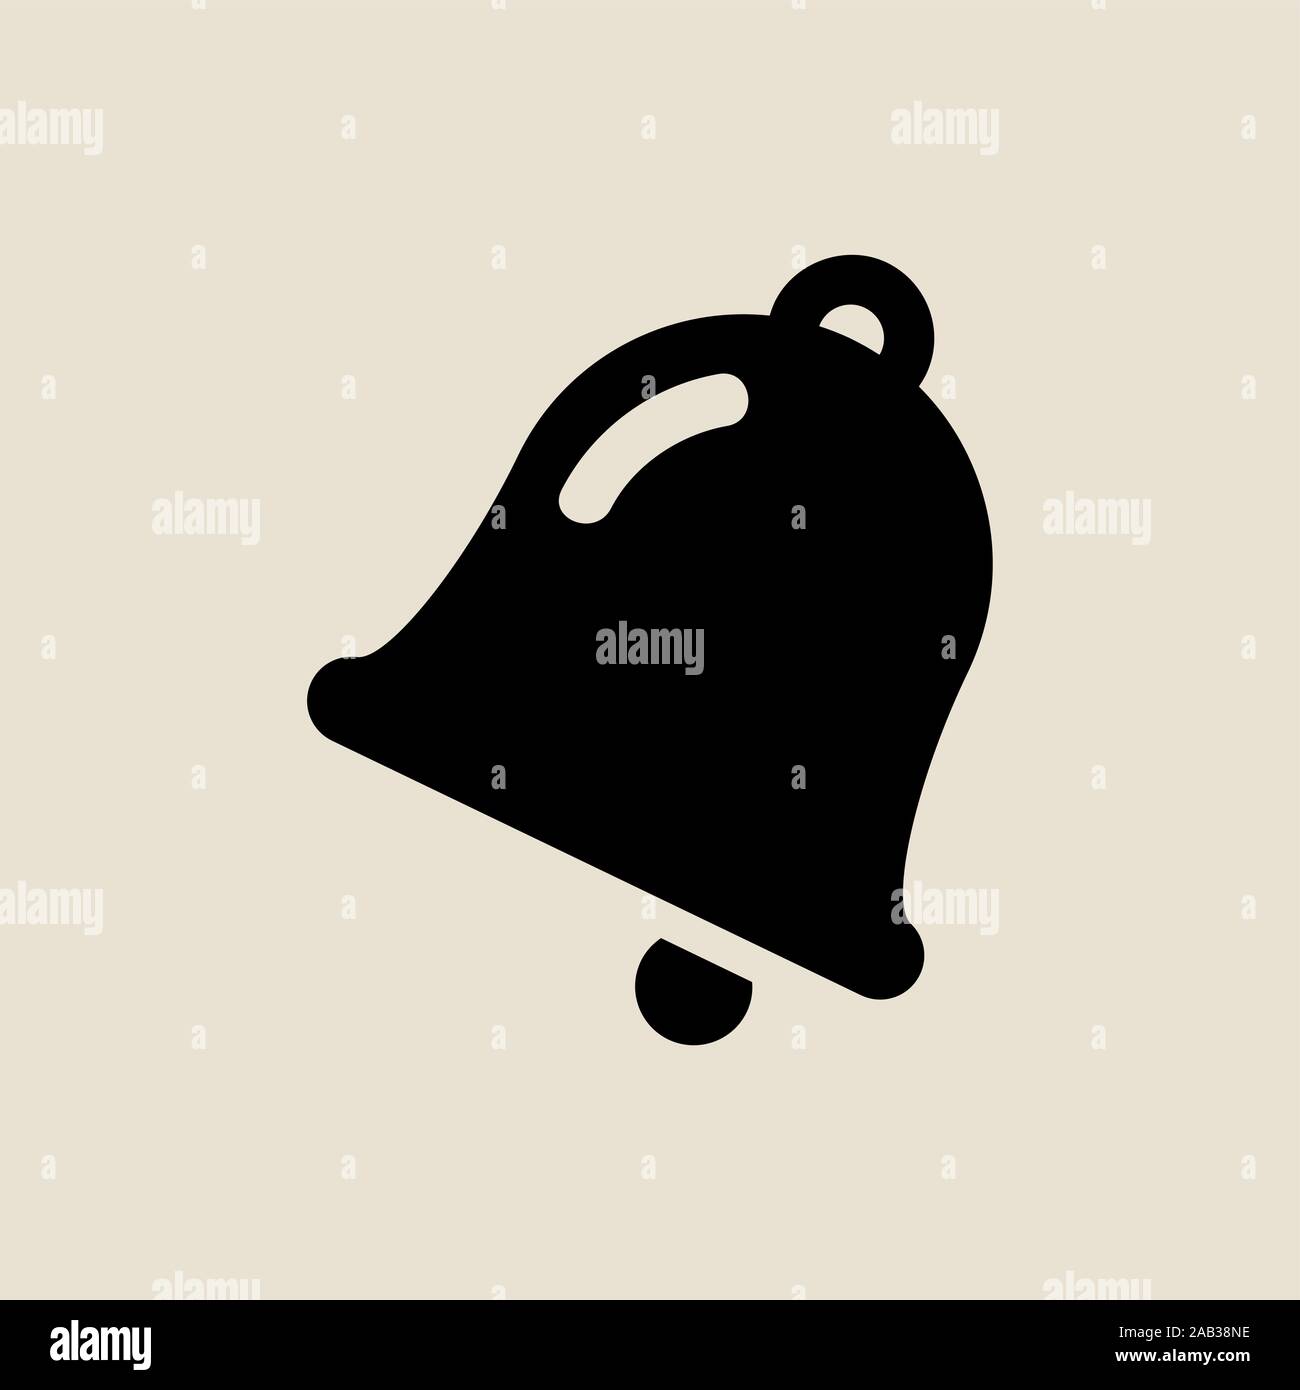 Handbell jingle bell icon simple flat style Christmas symbol. Stock Vector